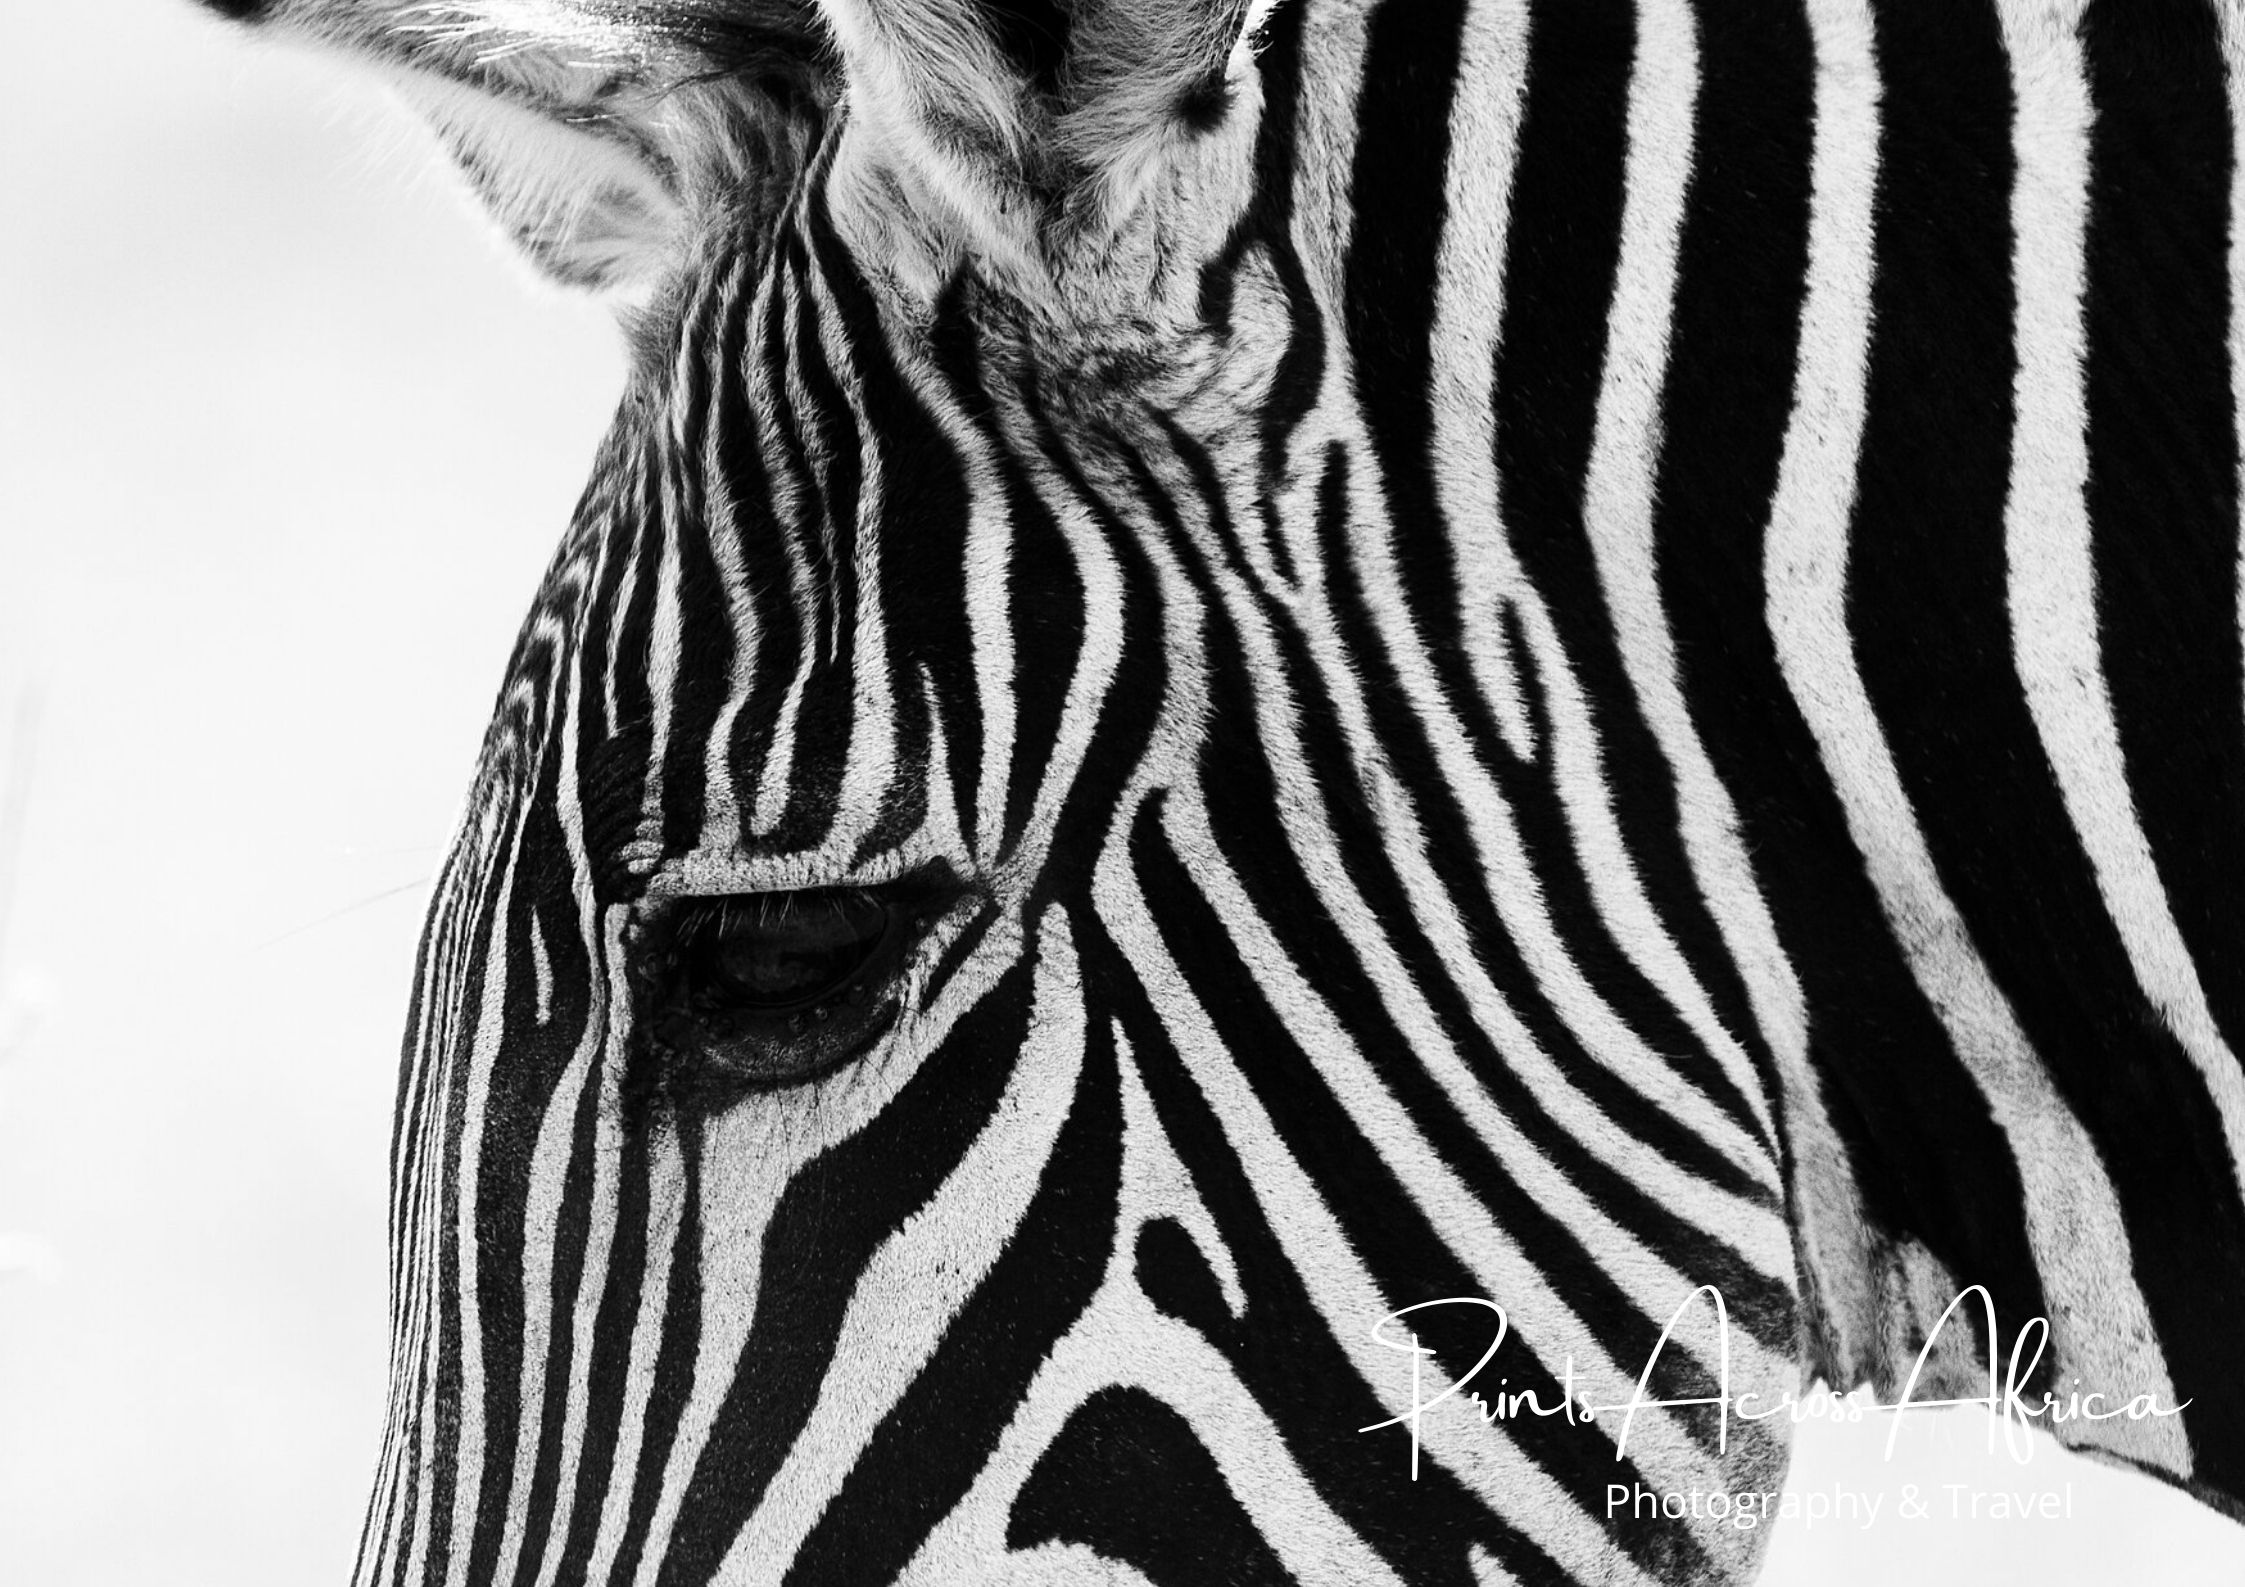 A close up of a zebra face